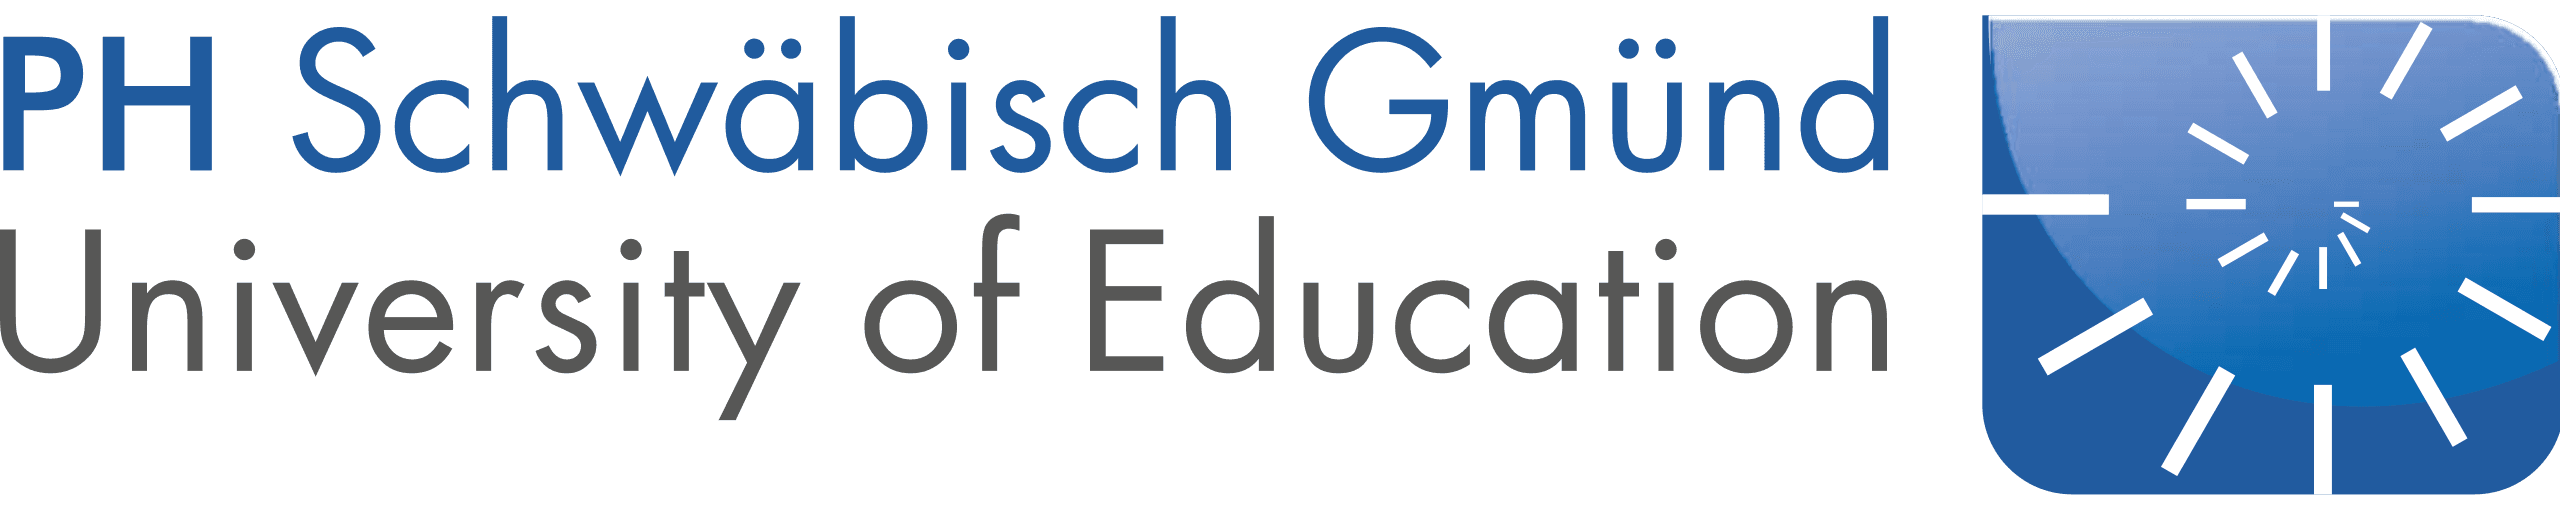 university-of-education-schwabisch-gmund-fb1e1a4cdf-cover-picture